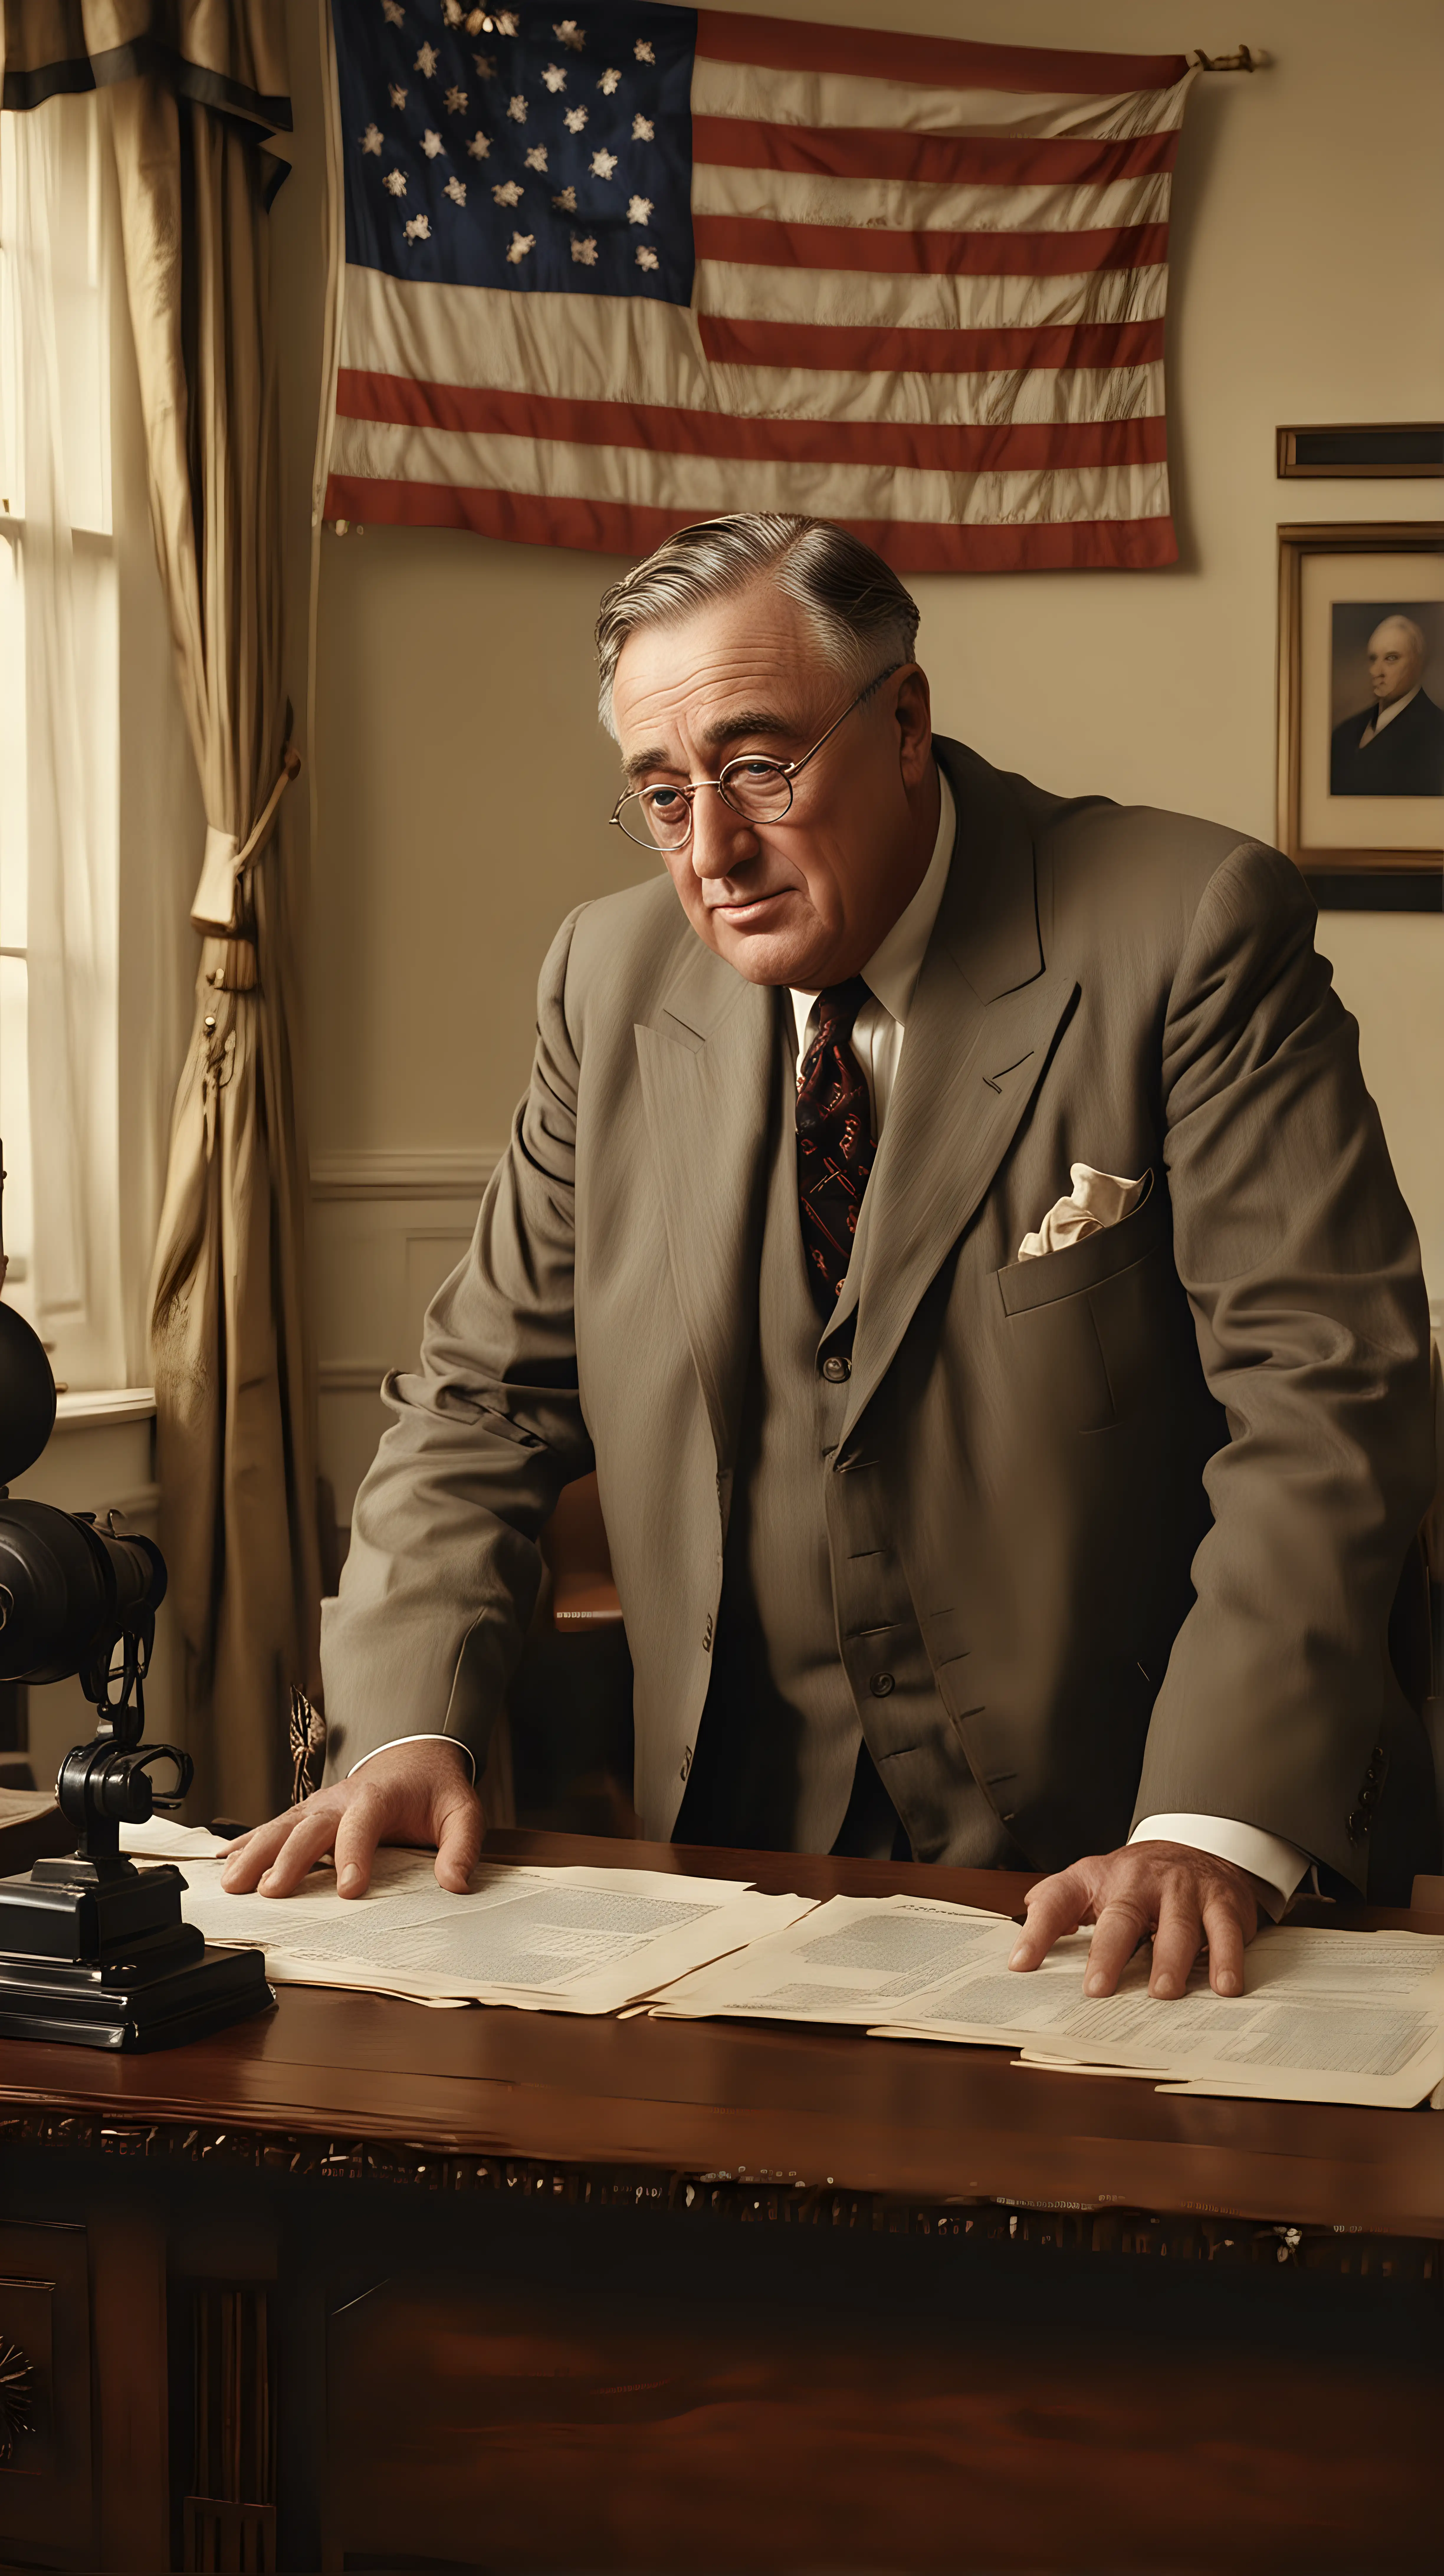 Resolute Franklin D Roosevelt Portrait Leading America Through Crisis